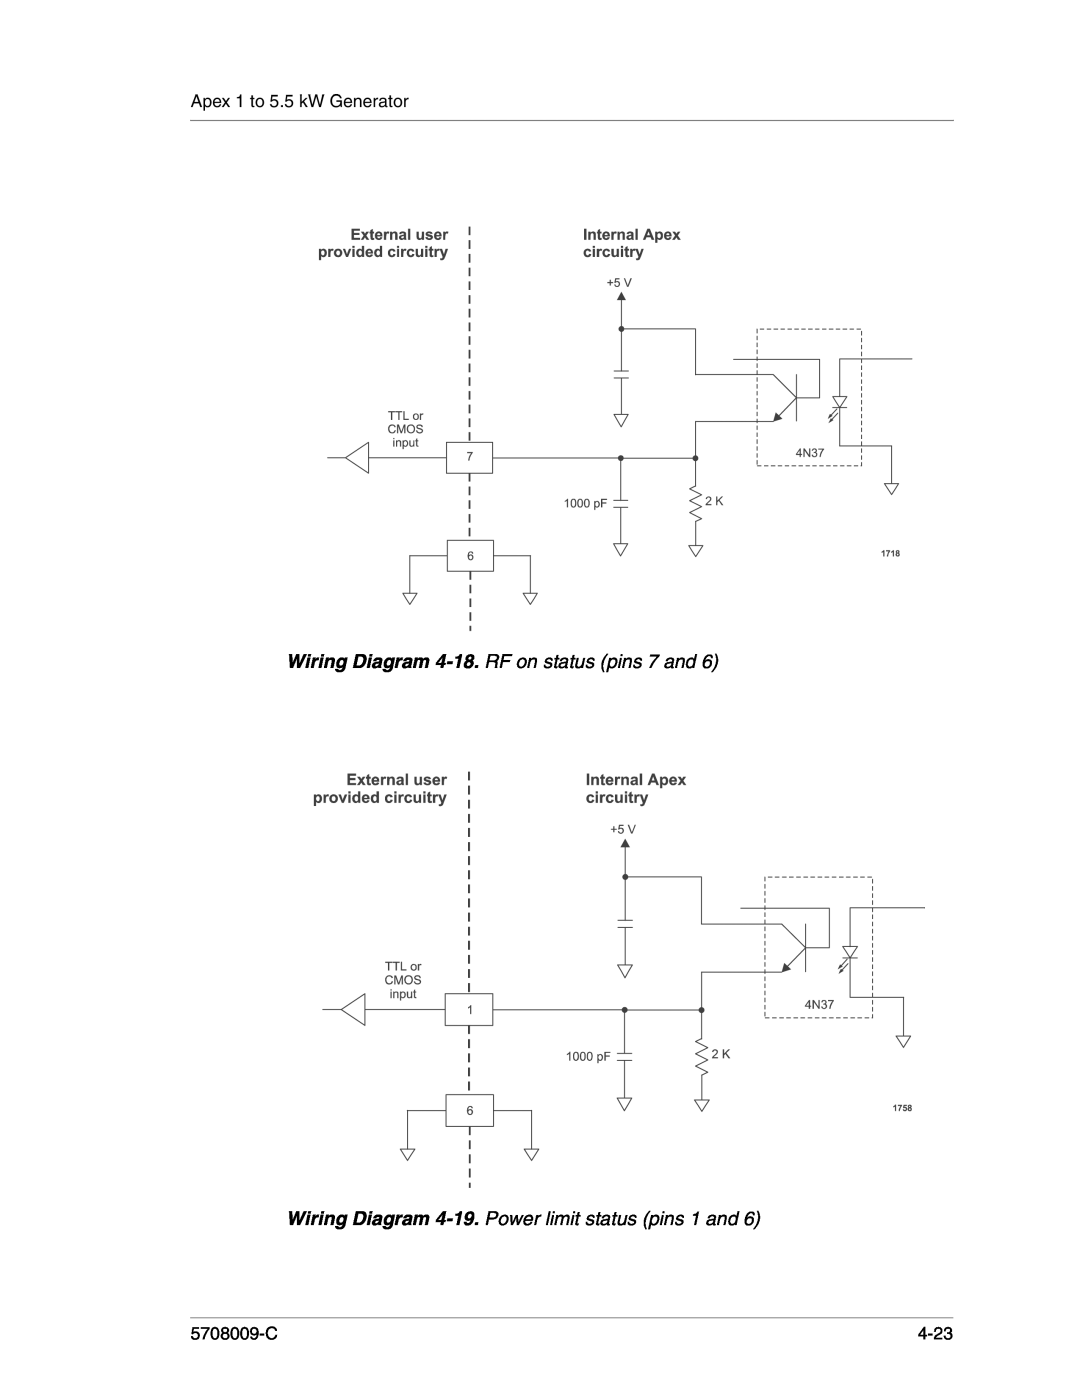 Apex Digital 5708009-C Wiring Diagram 4-18. RF on status pins 7 and, Wiring Diagram 4-19. Power limit status pins 1 and 